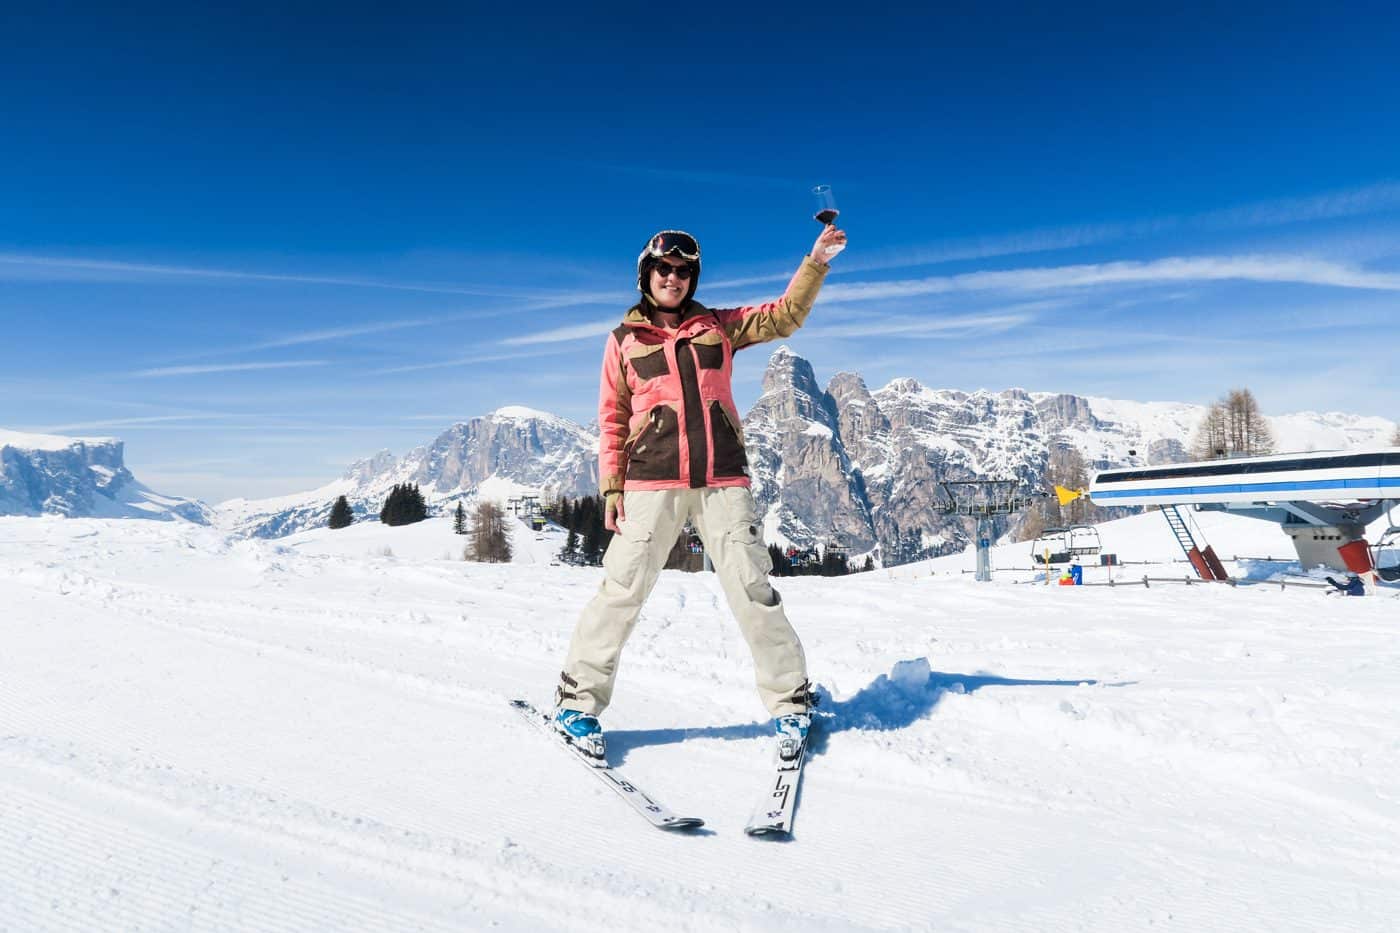 De beste wintersport ooit: Wine Ski Safari in Sud-Tirol!